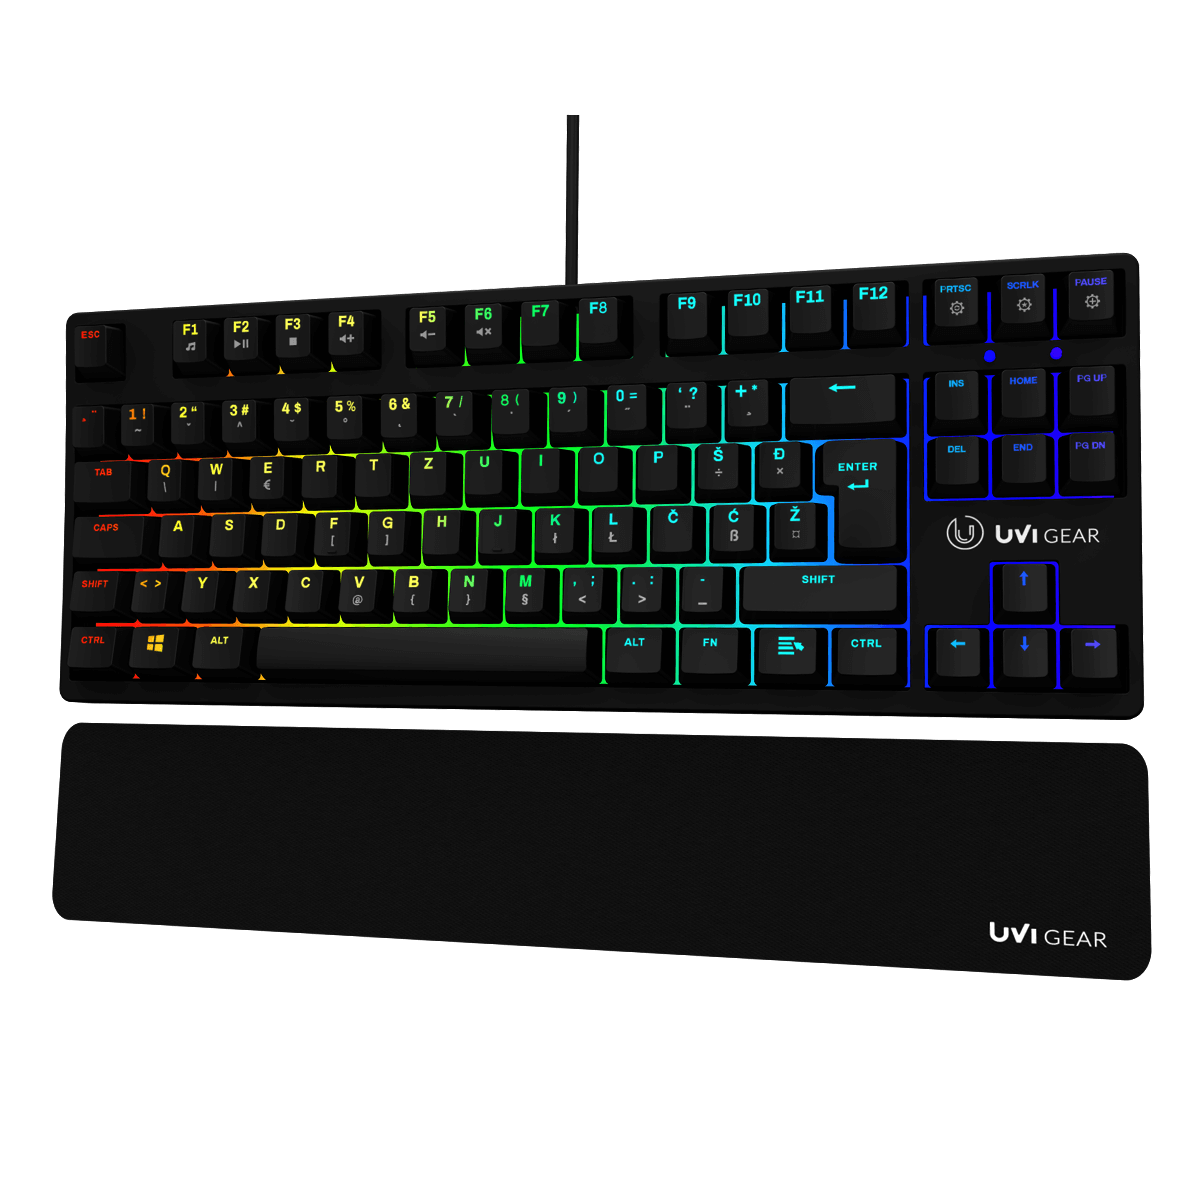 UVI Pride Mini RGB gaming keyboard